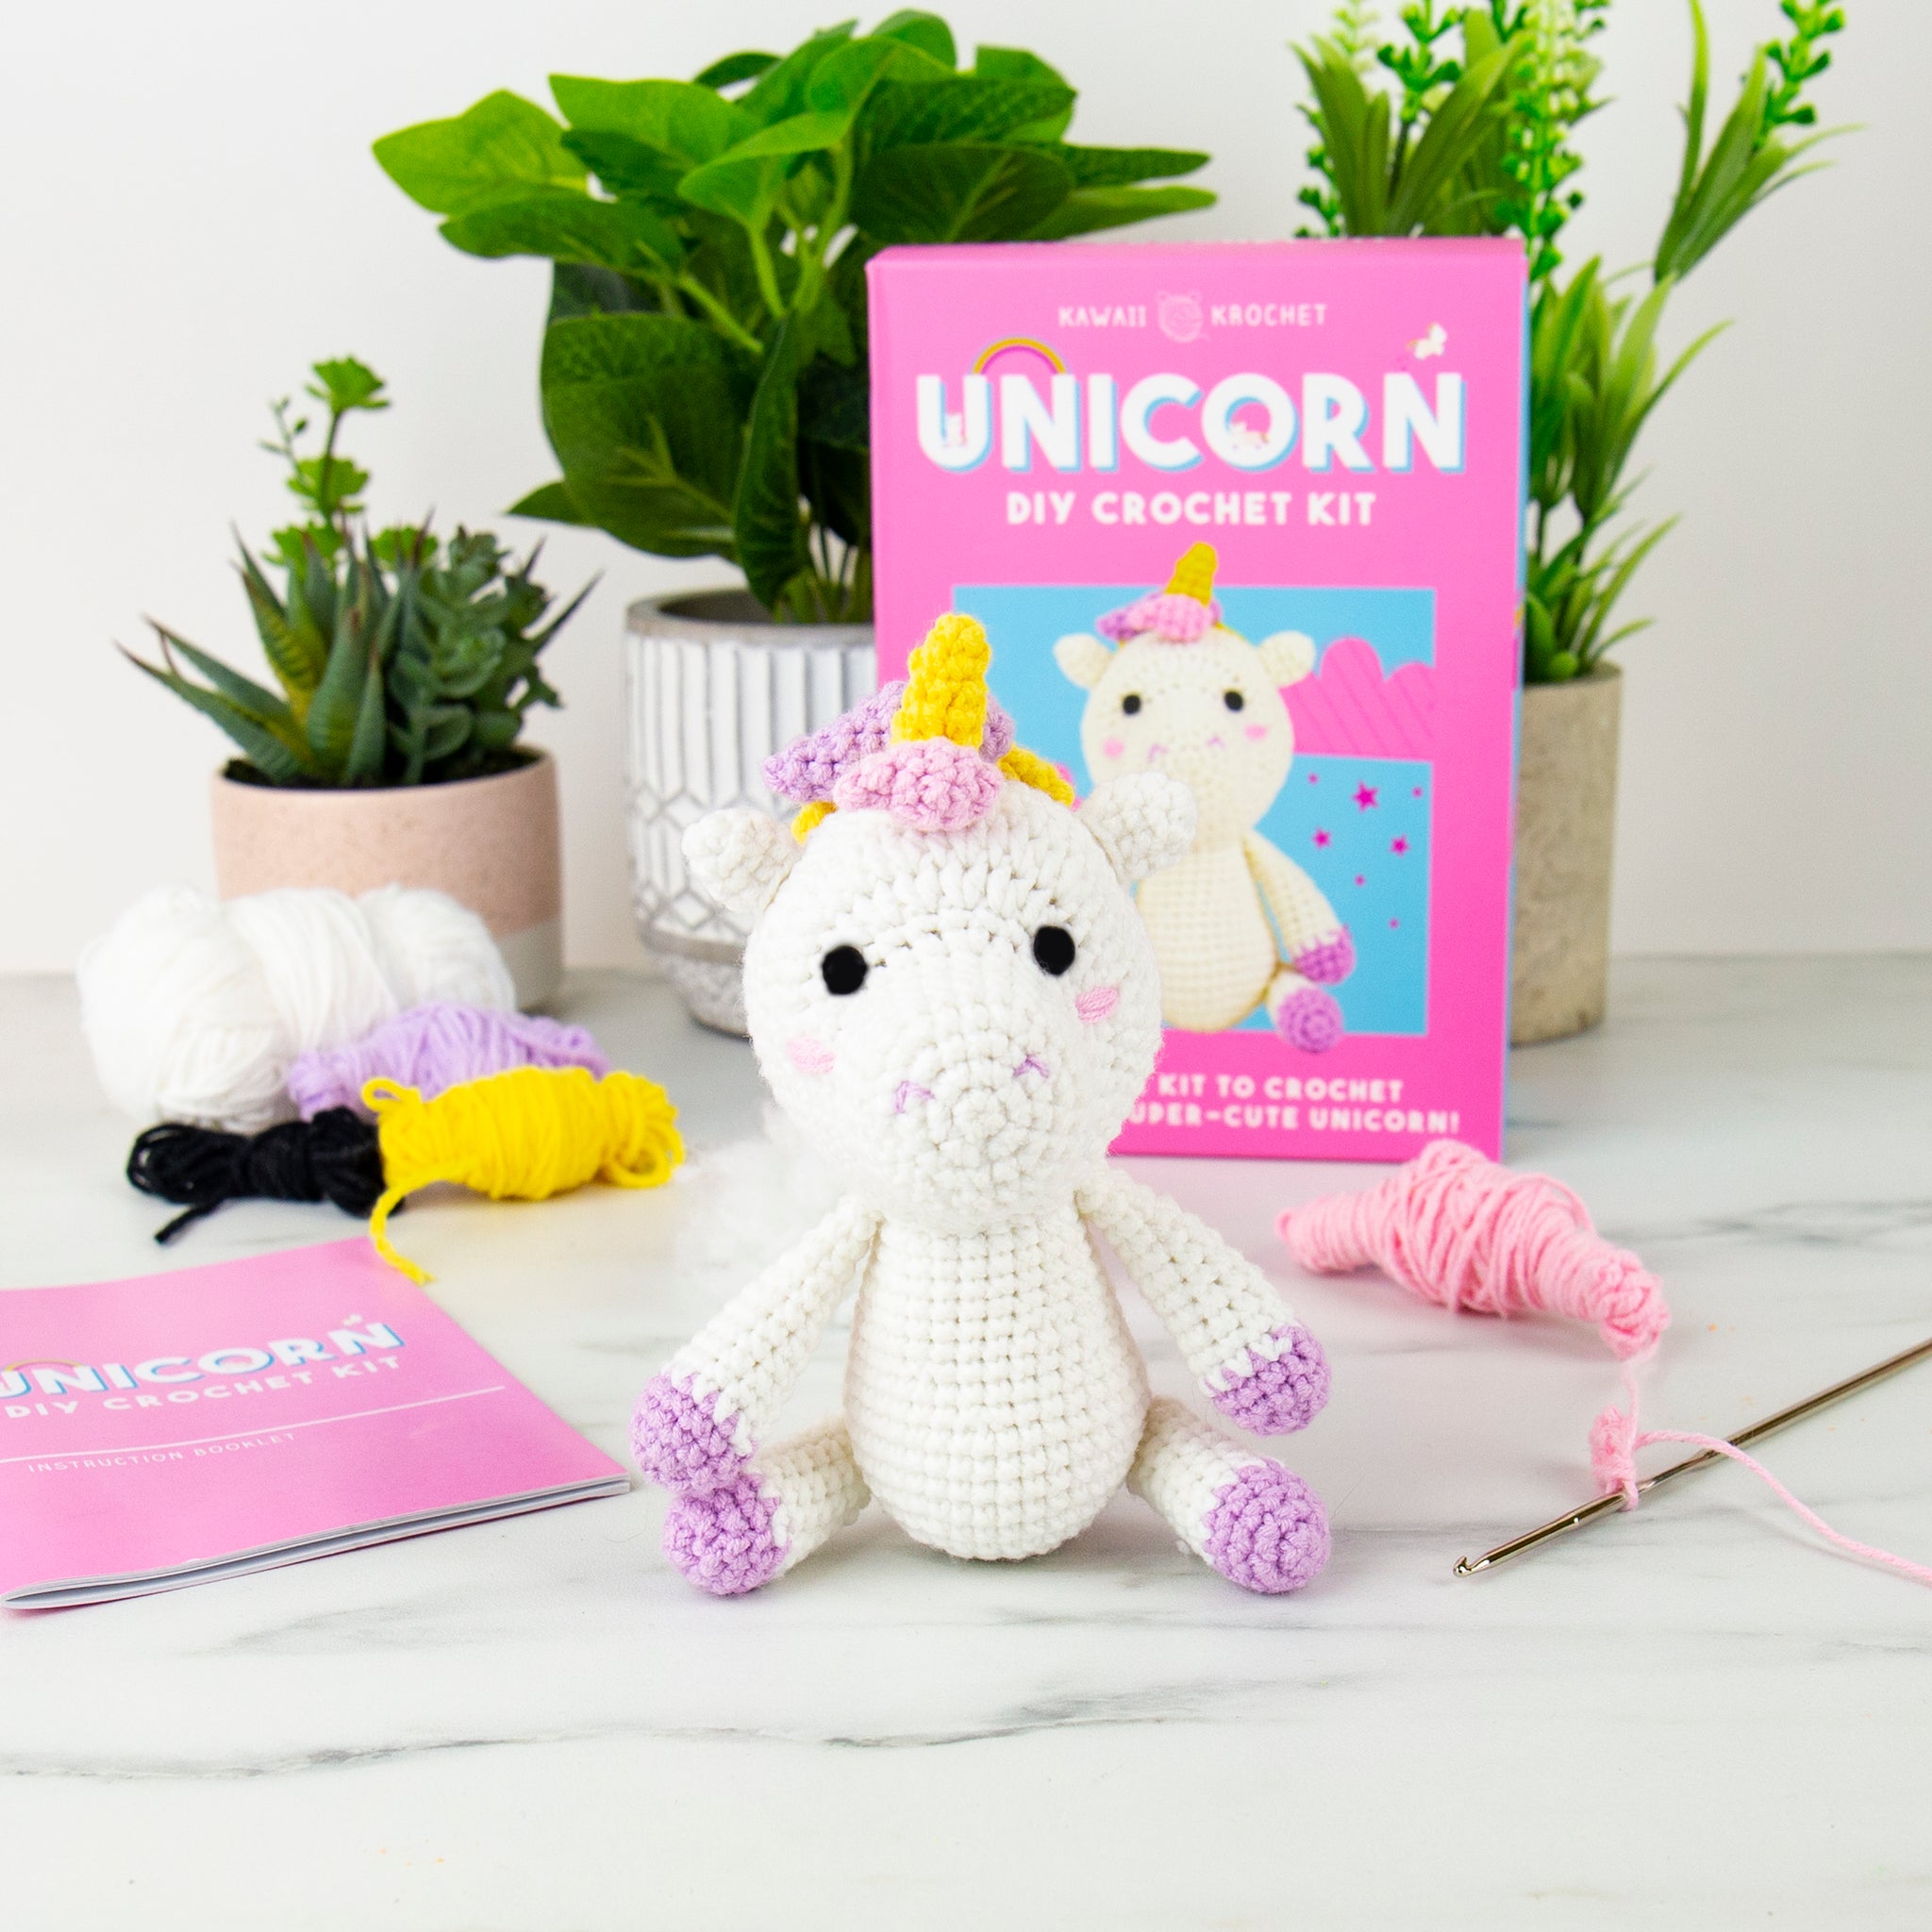 DIY Crochet Kit - Unicorn